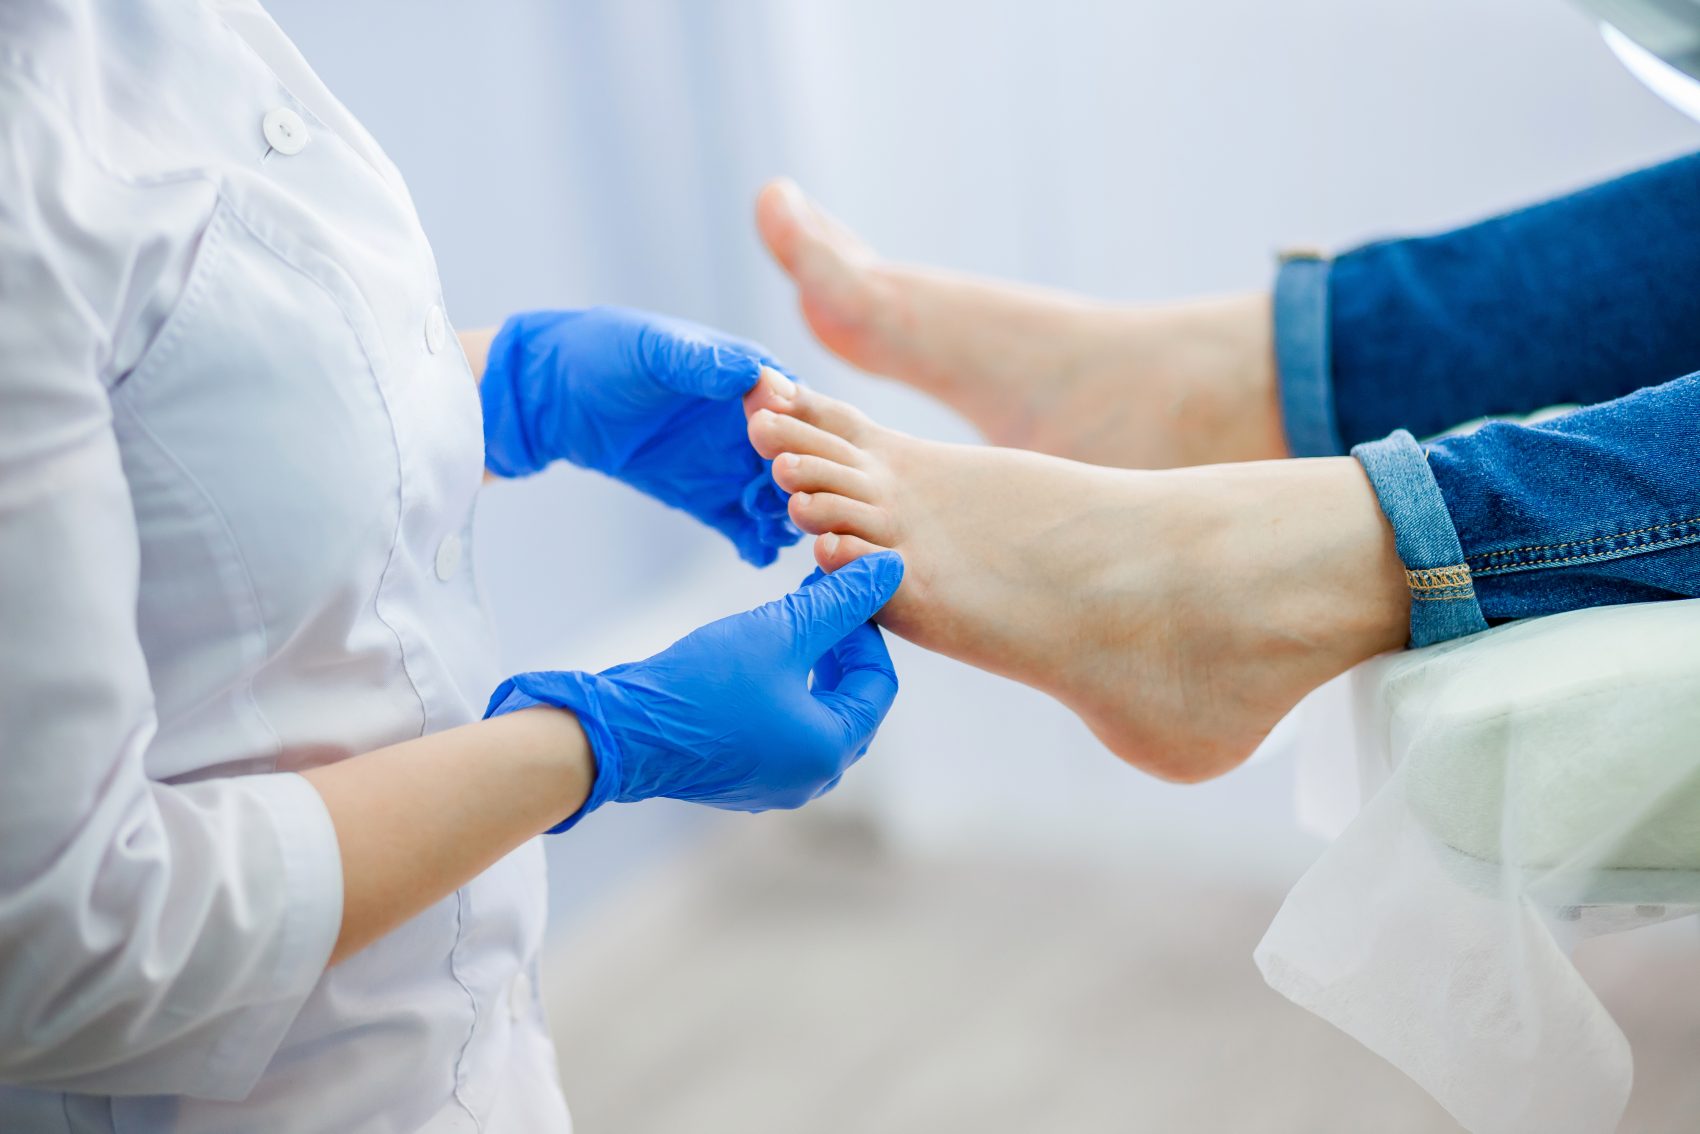 Dermatologist dealing with chronic toenail fungus